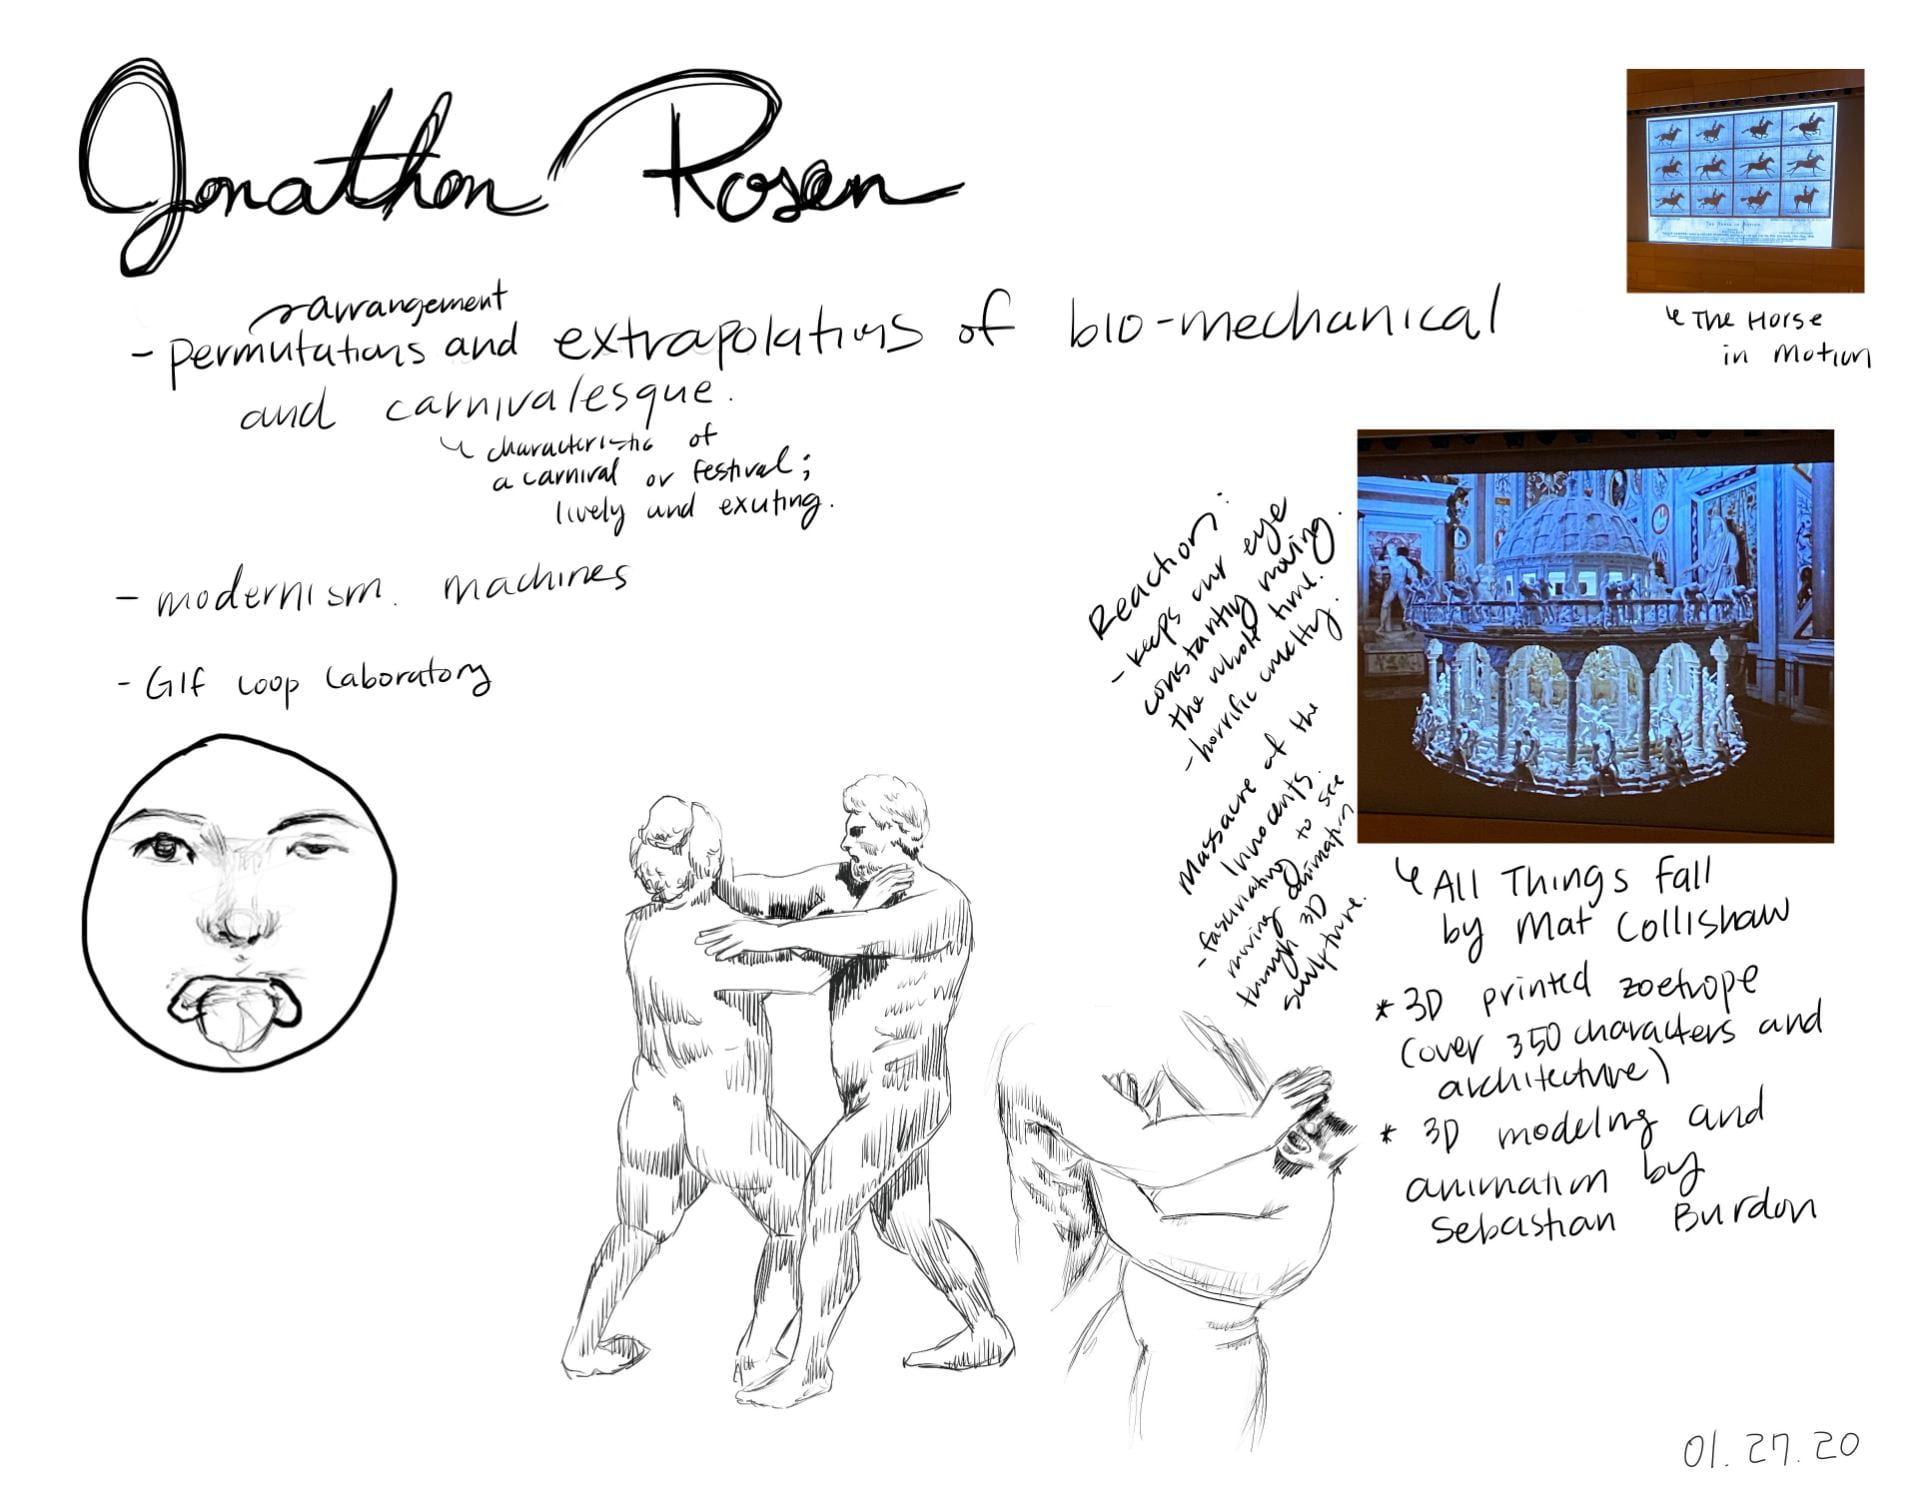 Week 1 Jonathon Rosen lecture sketchbook